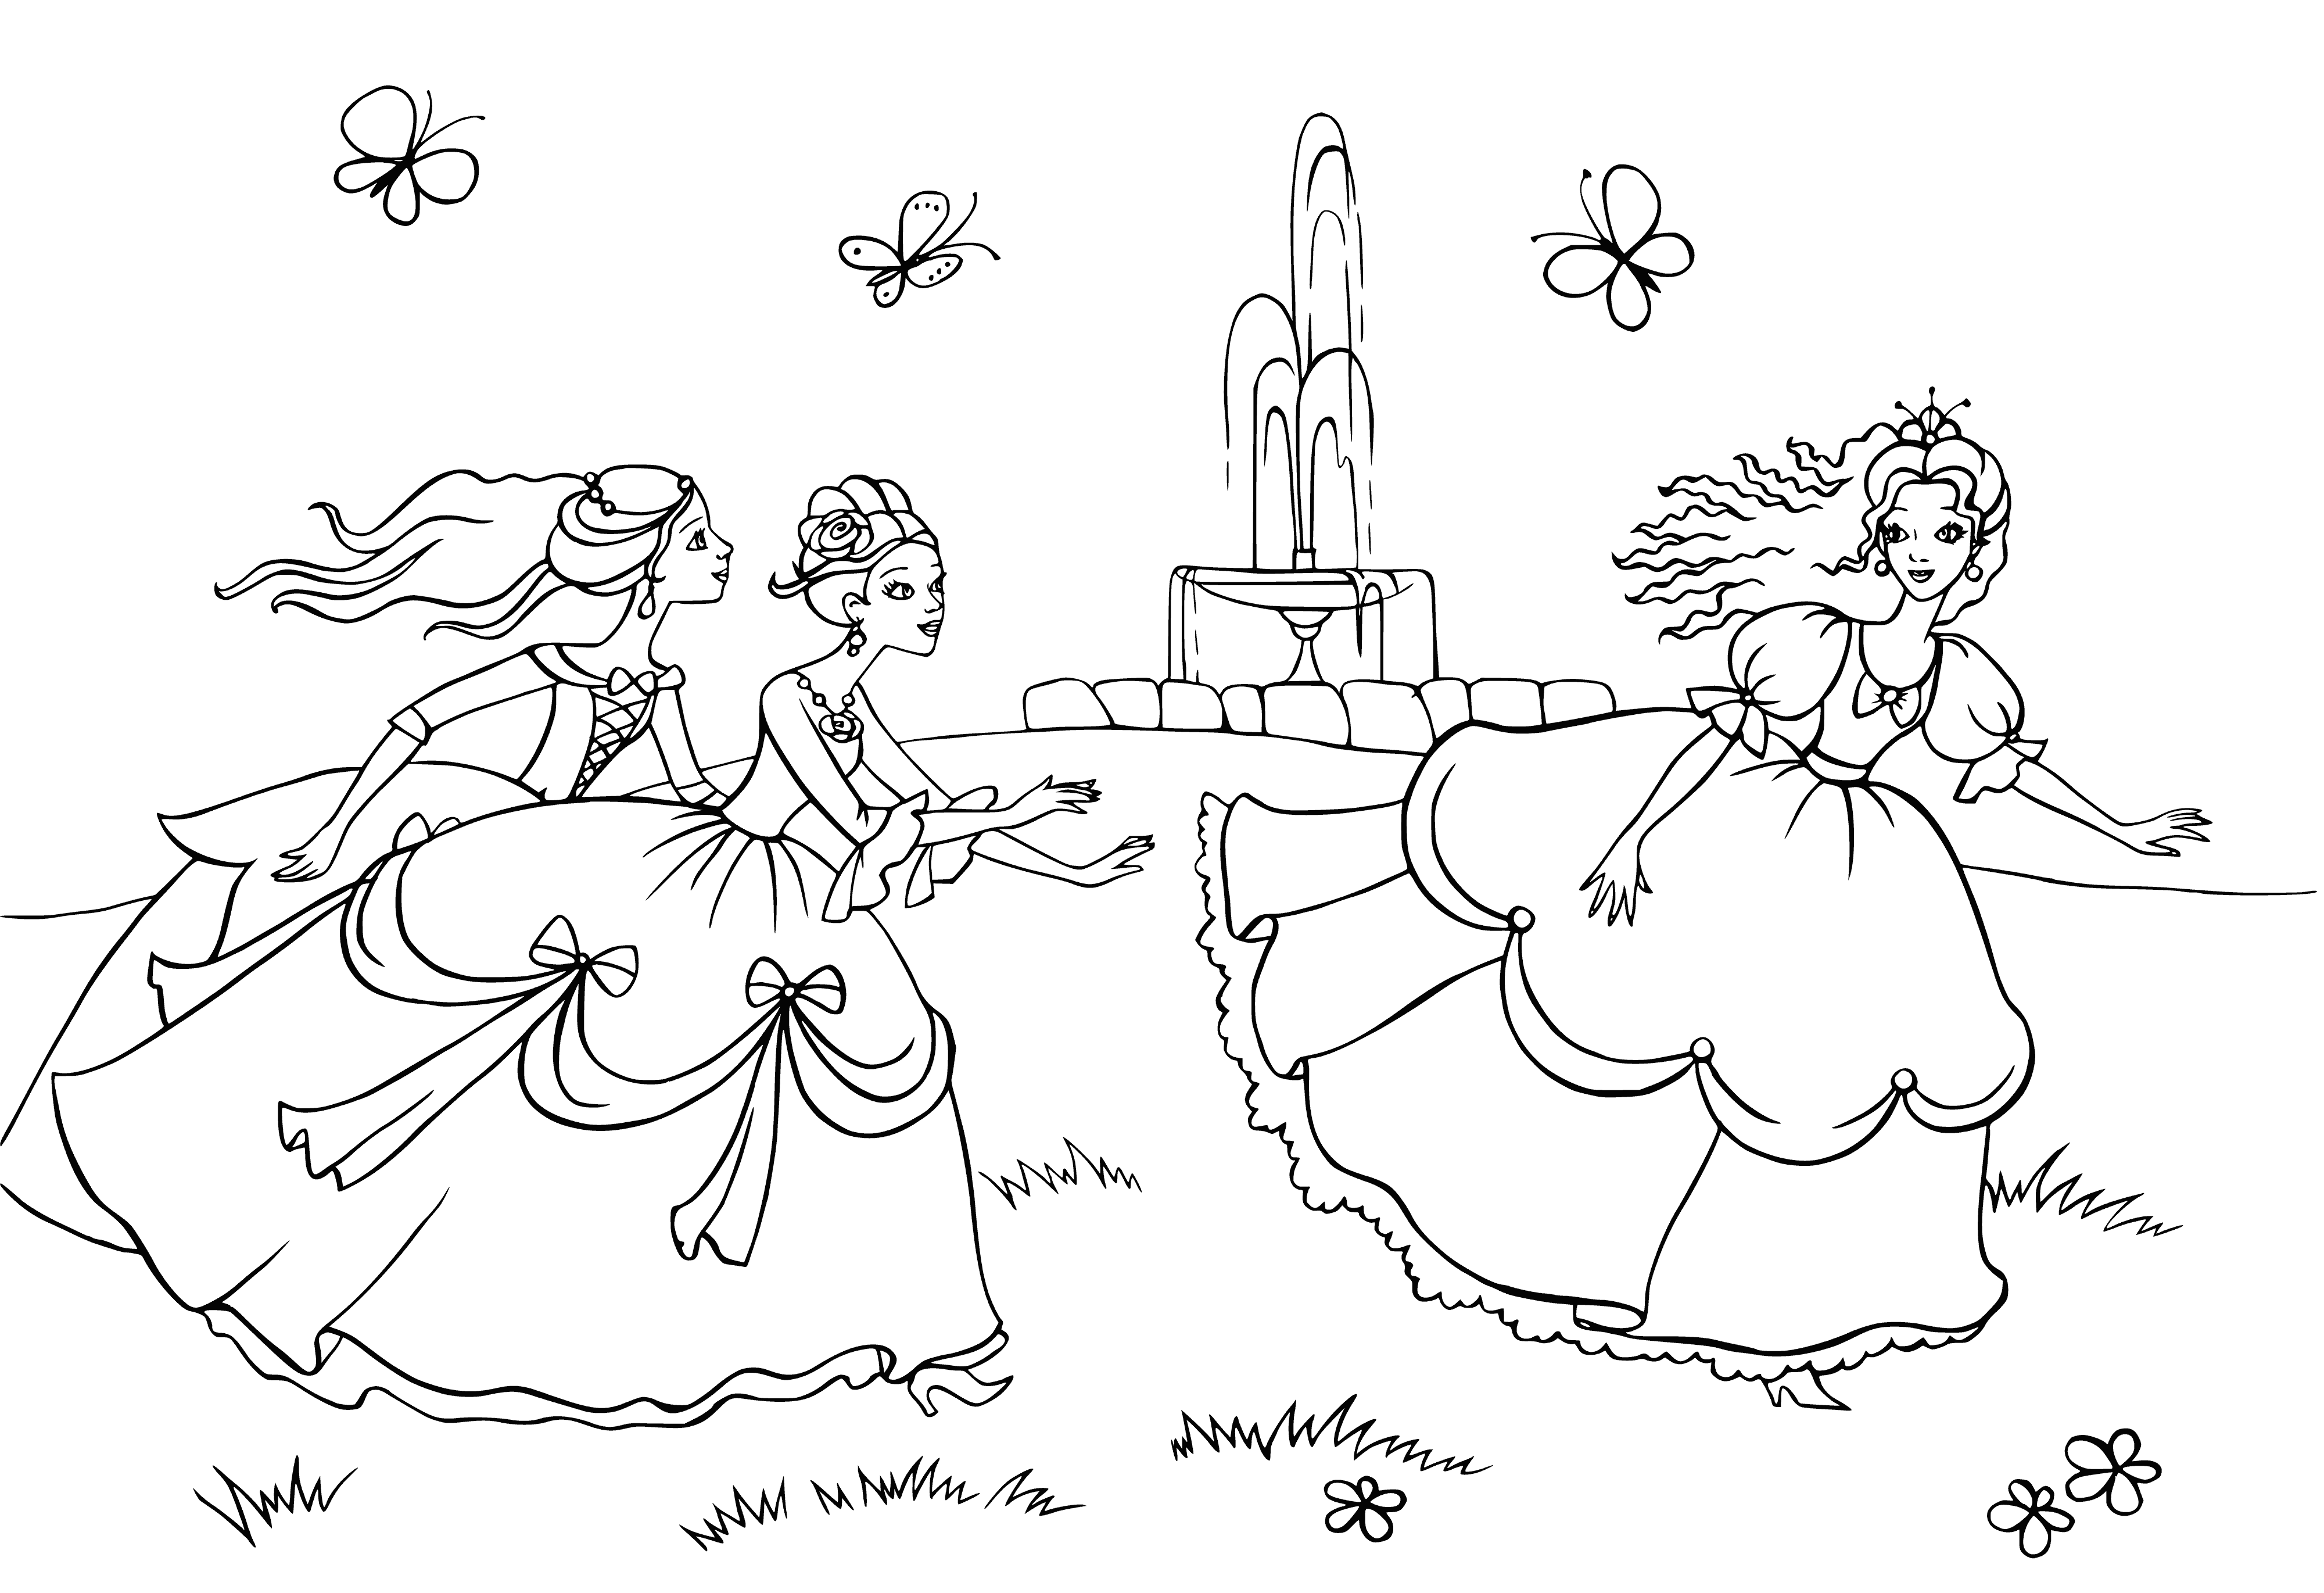 Princess games coloring page